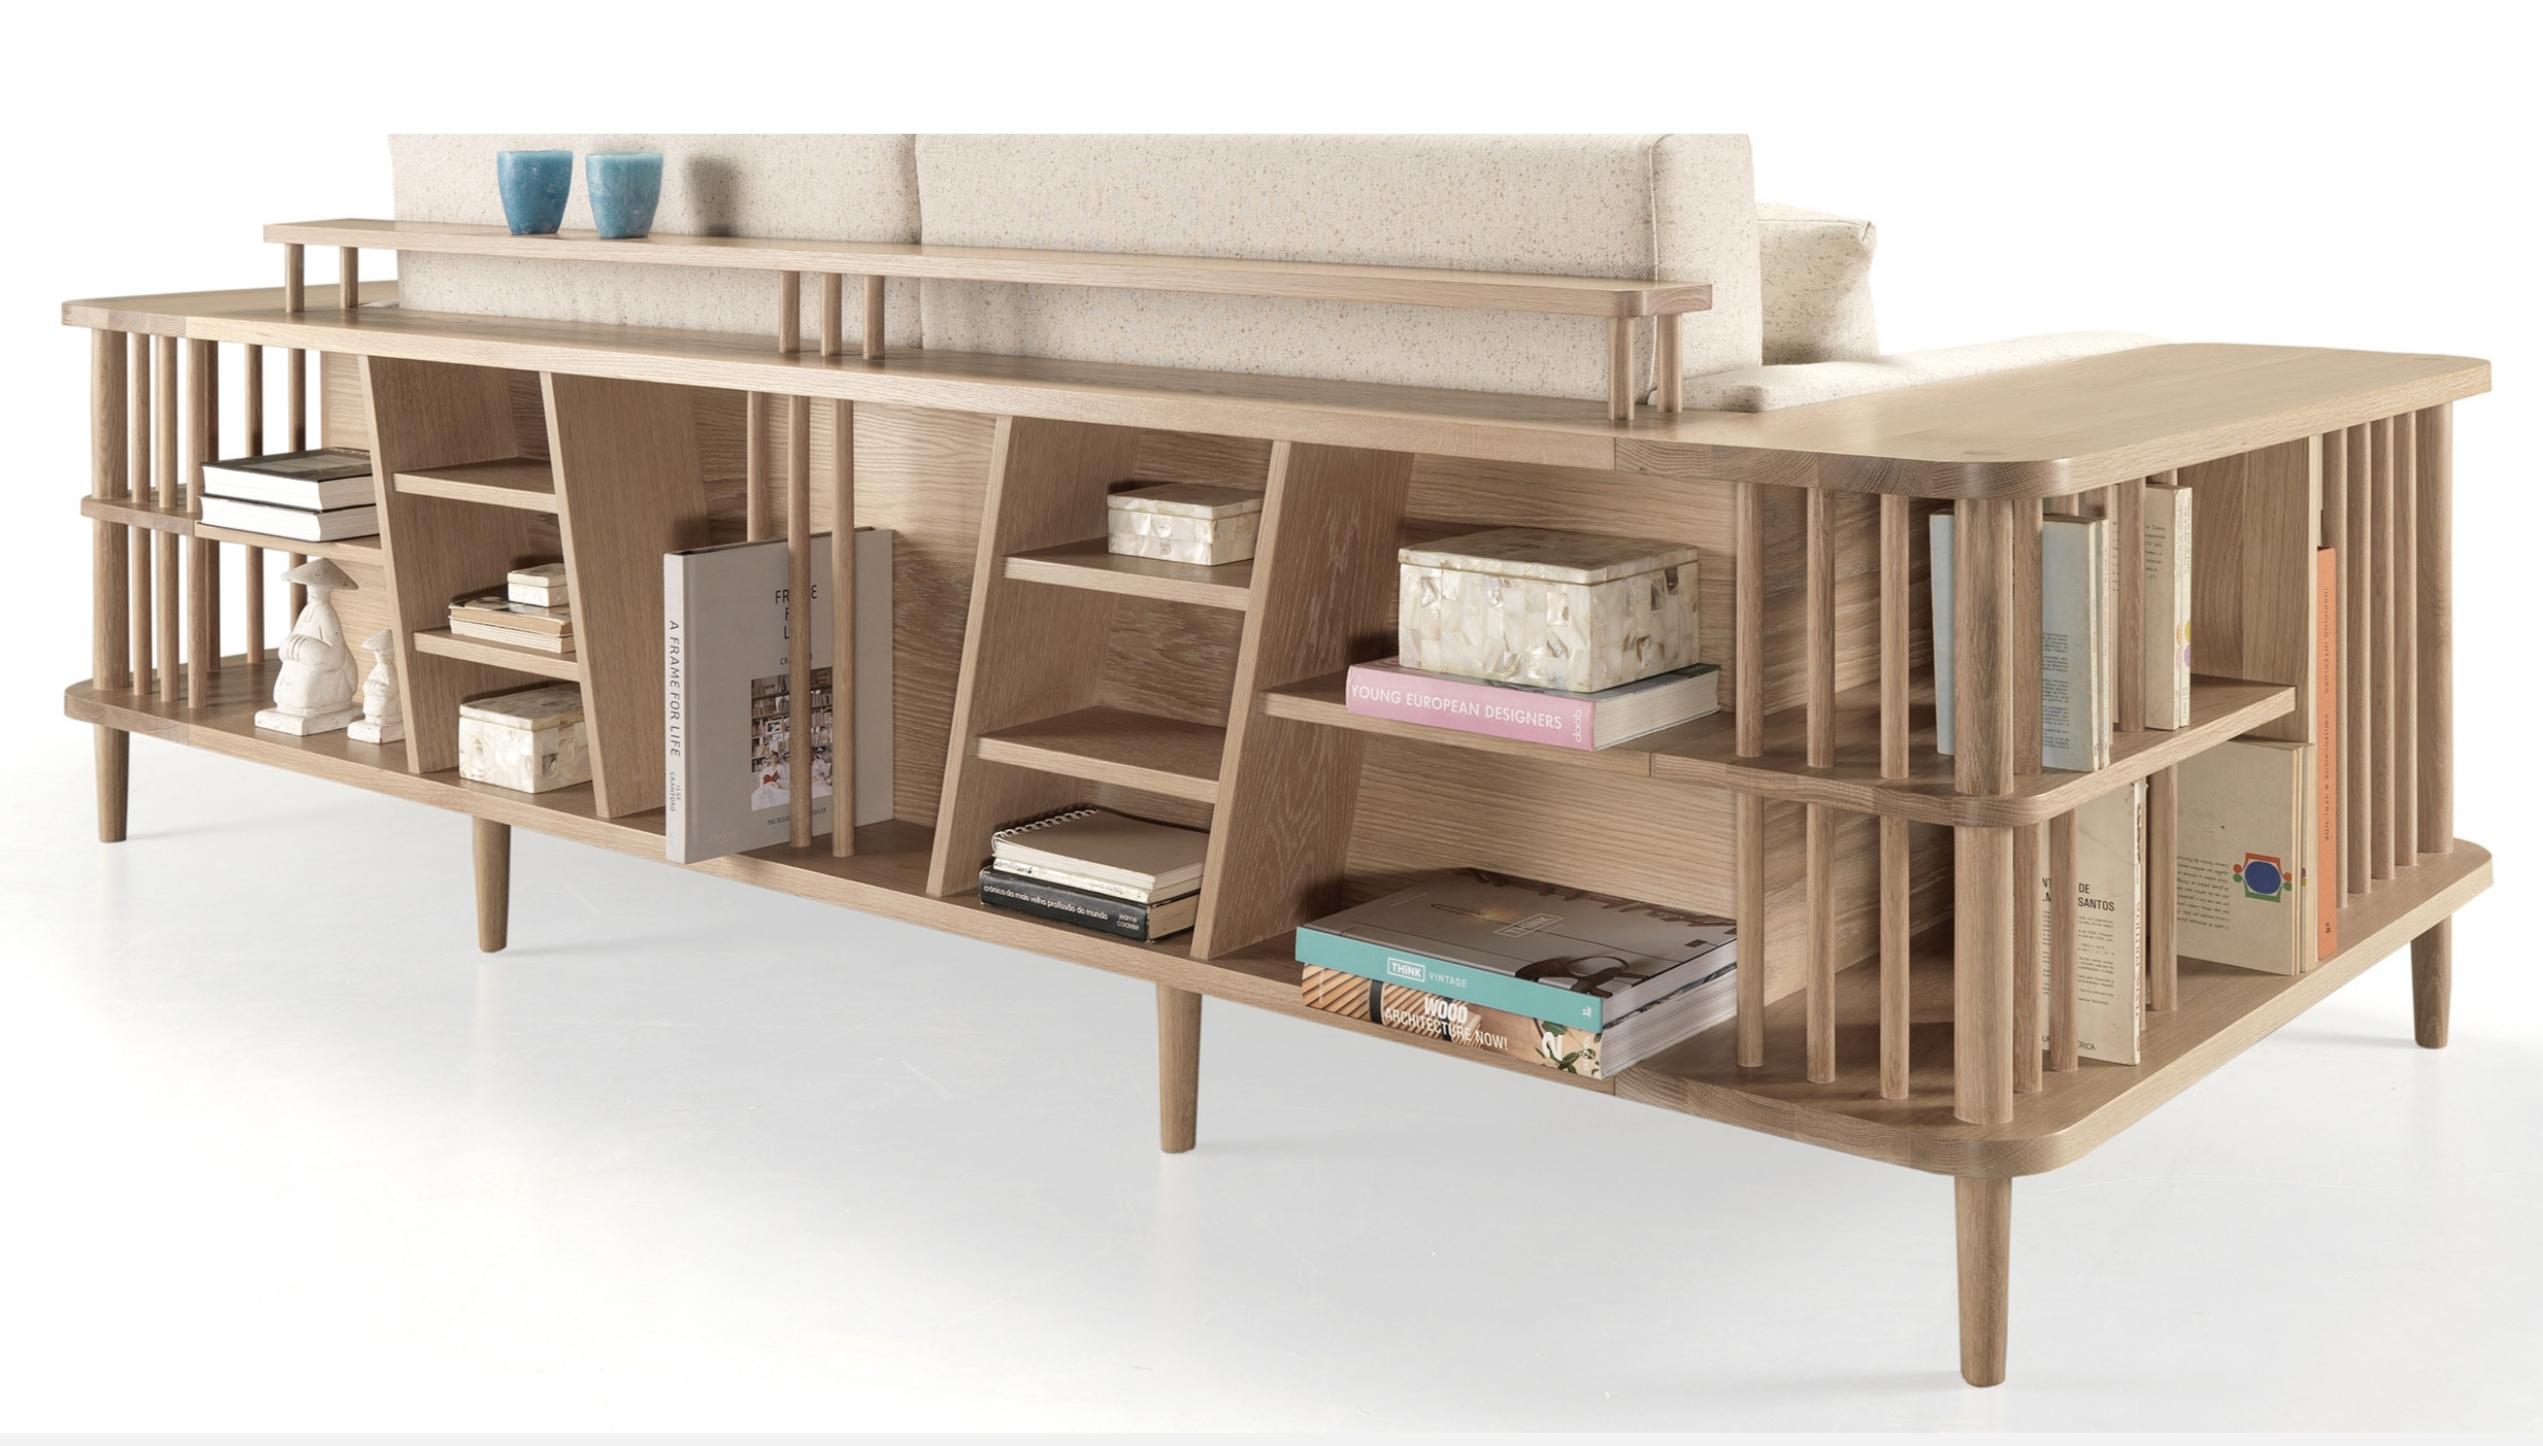 Portuguese Sofa and Bookshelf Room Divider in Walnut or Oak